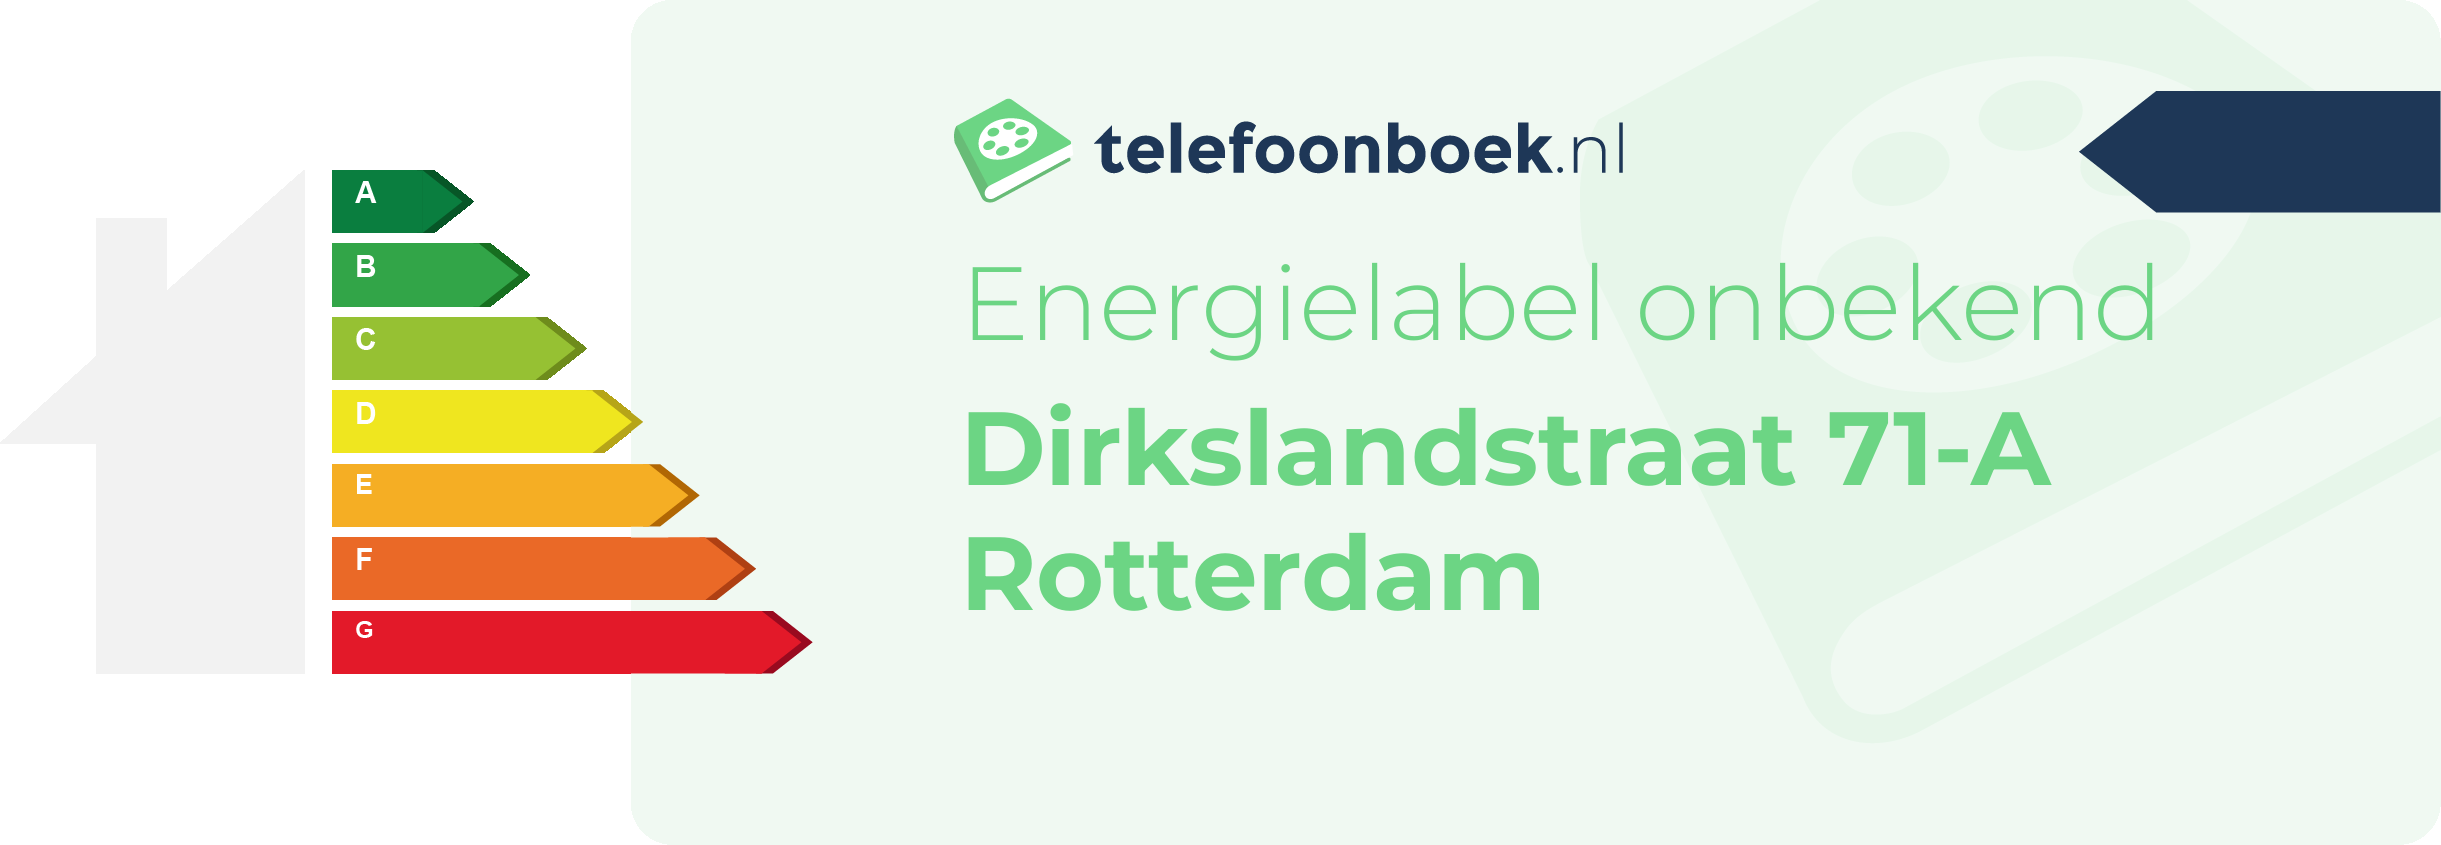 Energielabel Dirkslandstraat 71-A Rotterdam